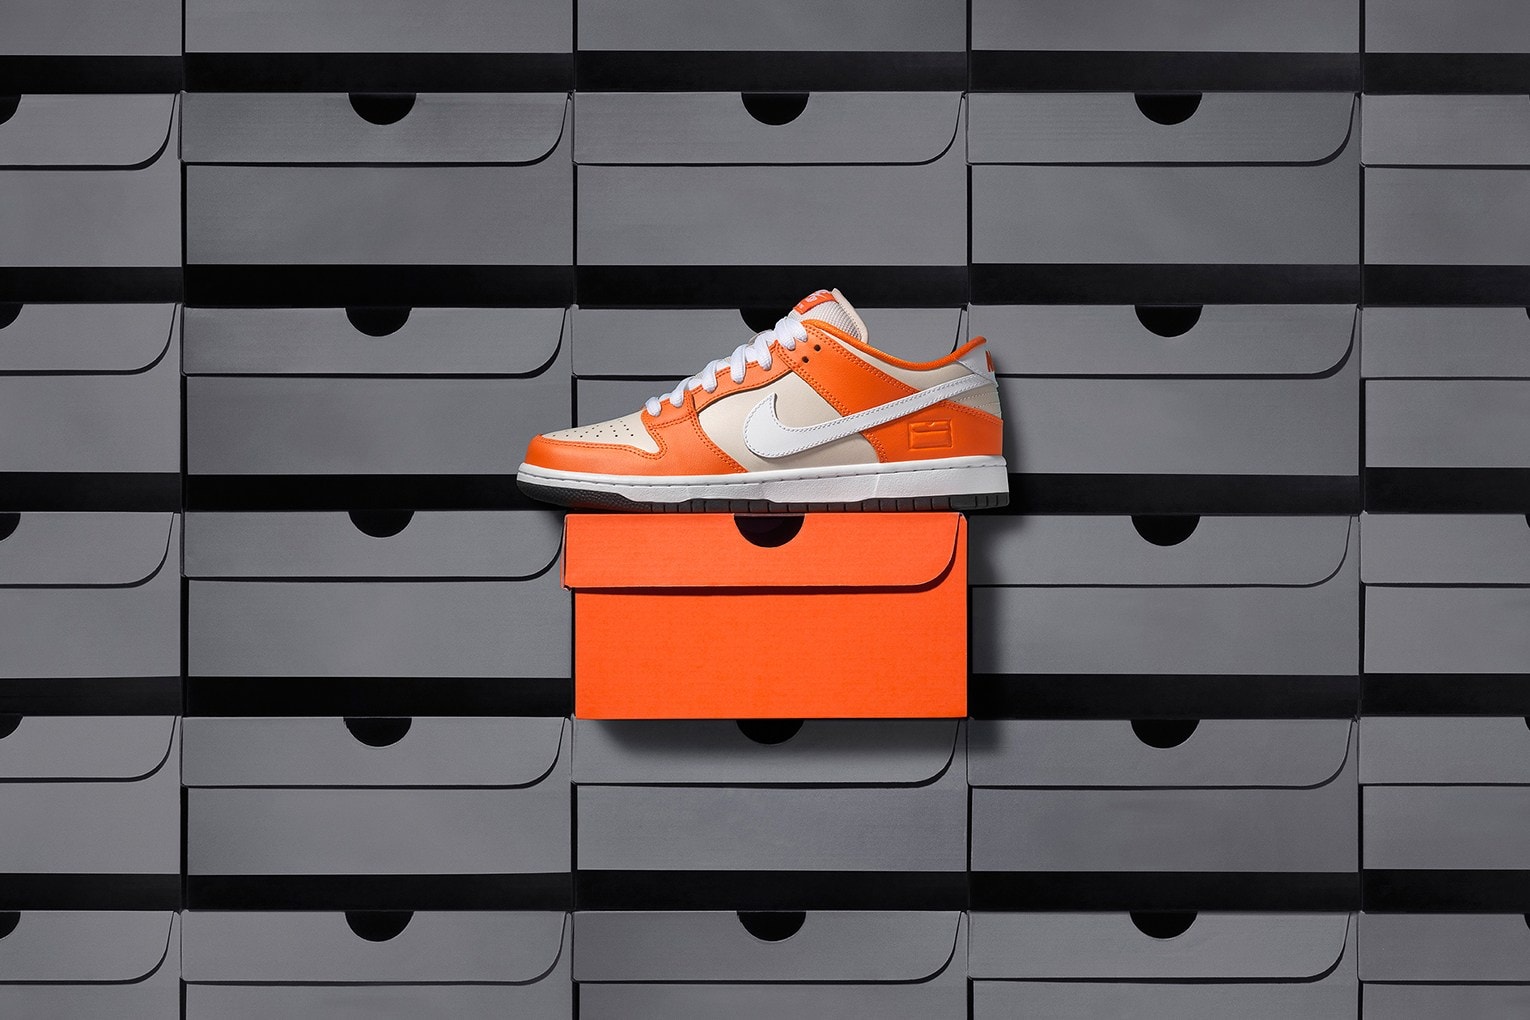 Nike SB Dunk Low Premium Orange Box Closer Look Old School Orange white colorway skateboarding white swoosh shoebox emboss